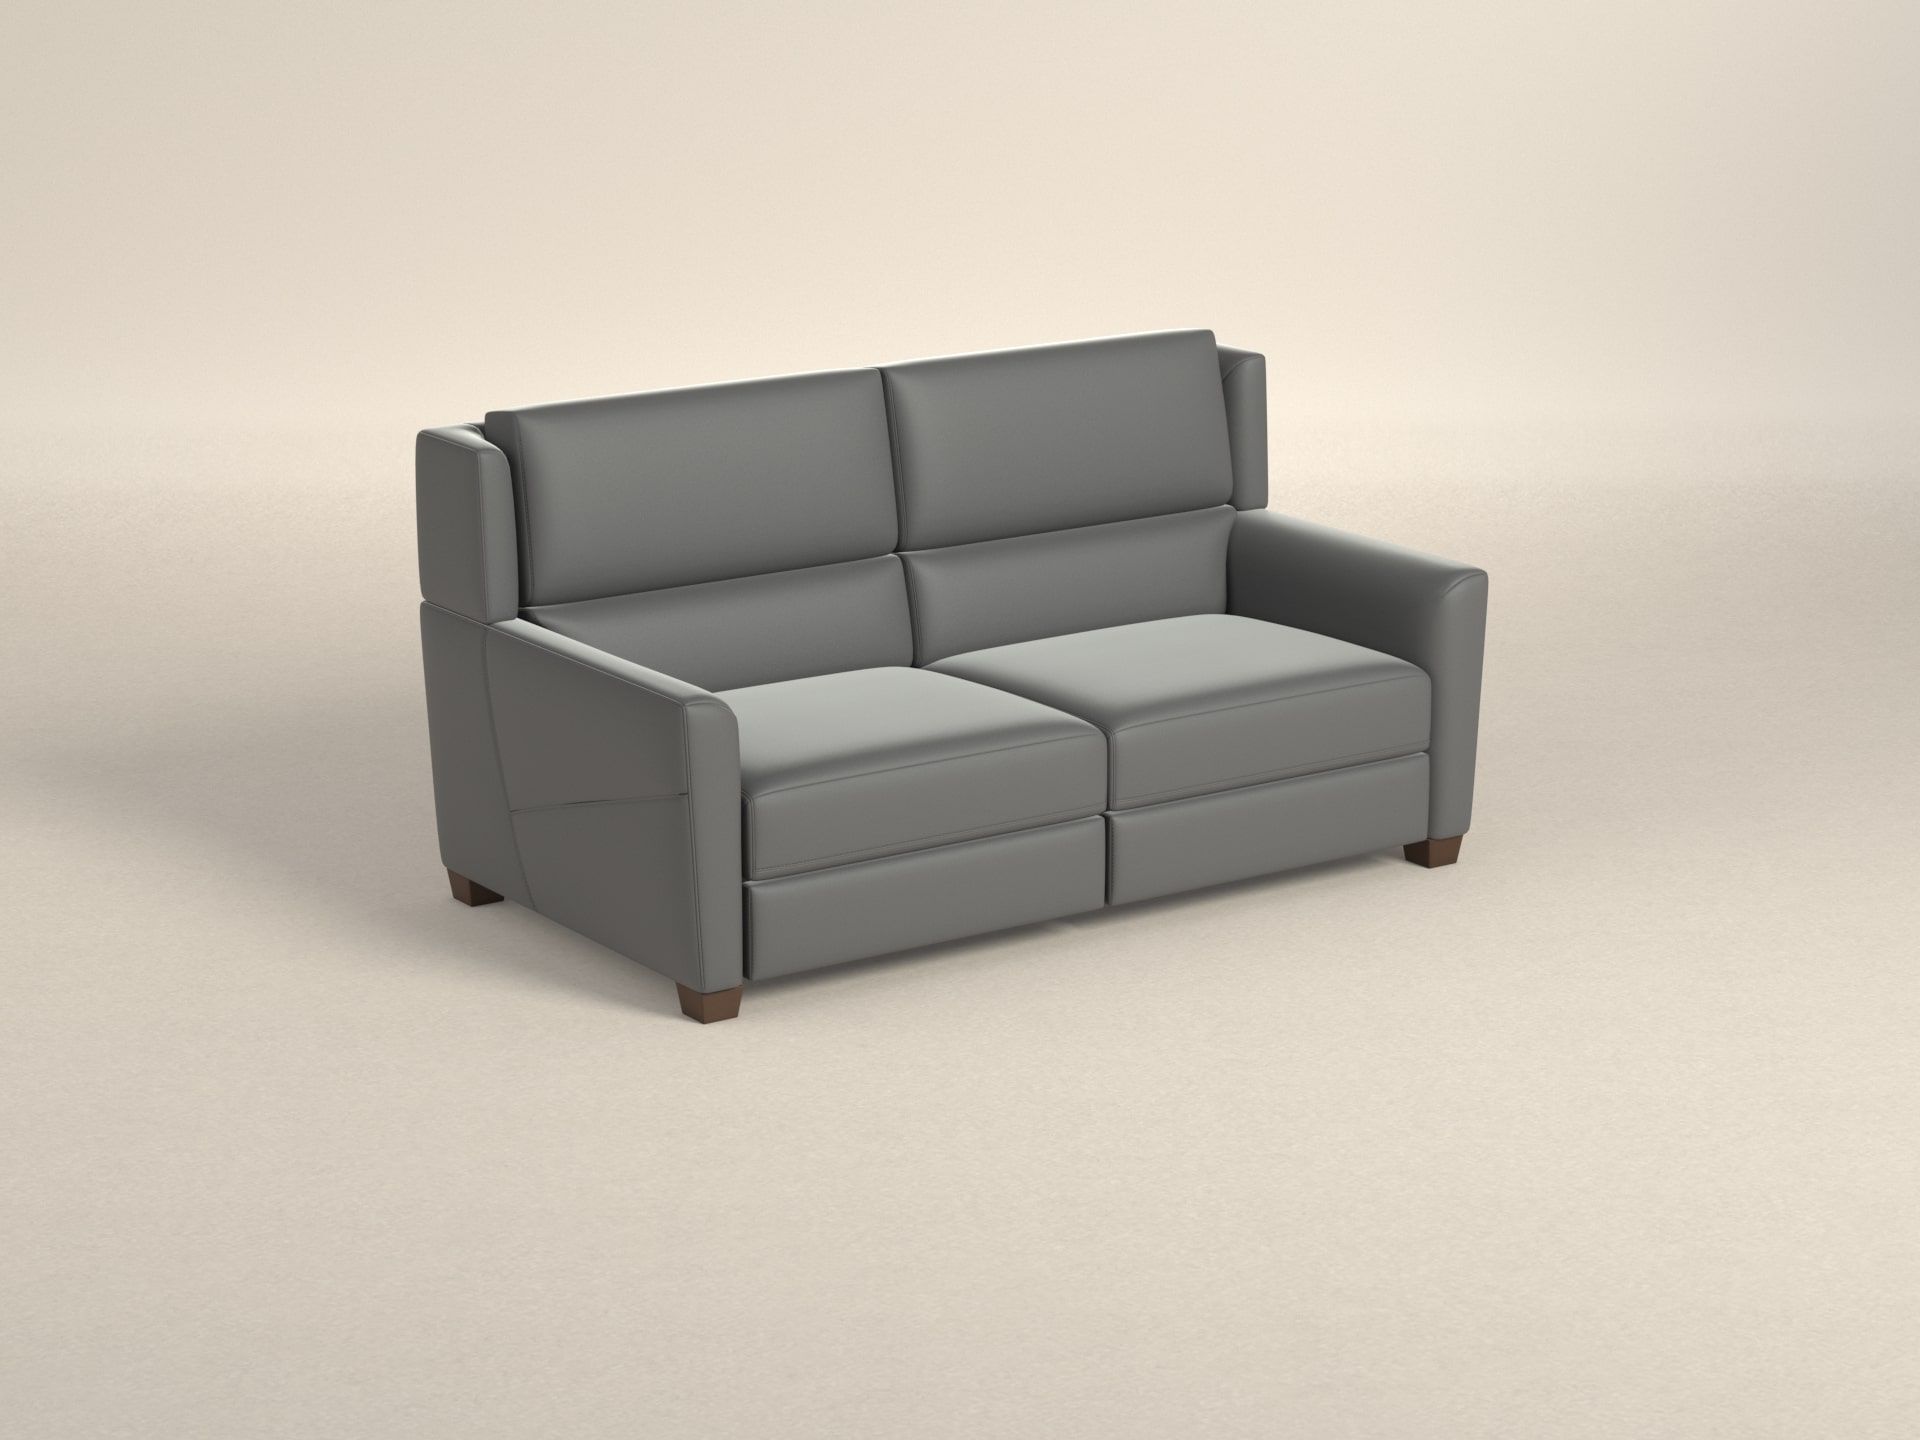 Preset default image - Caloroso Recliner Sofa - Leather